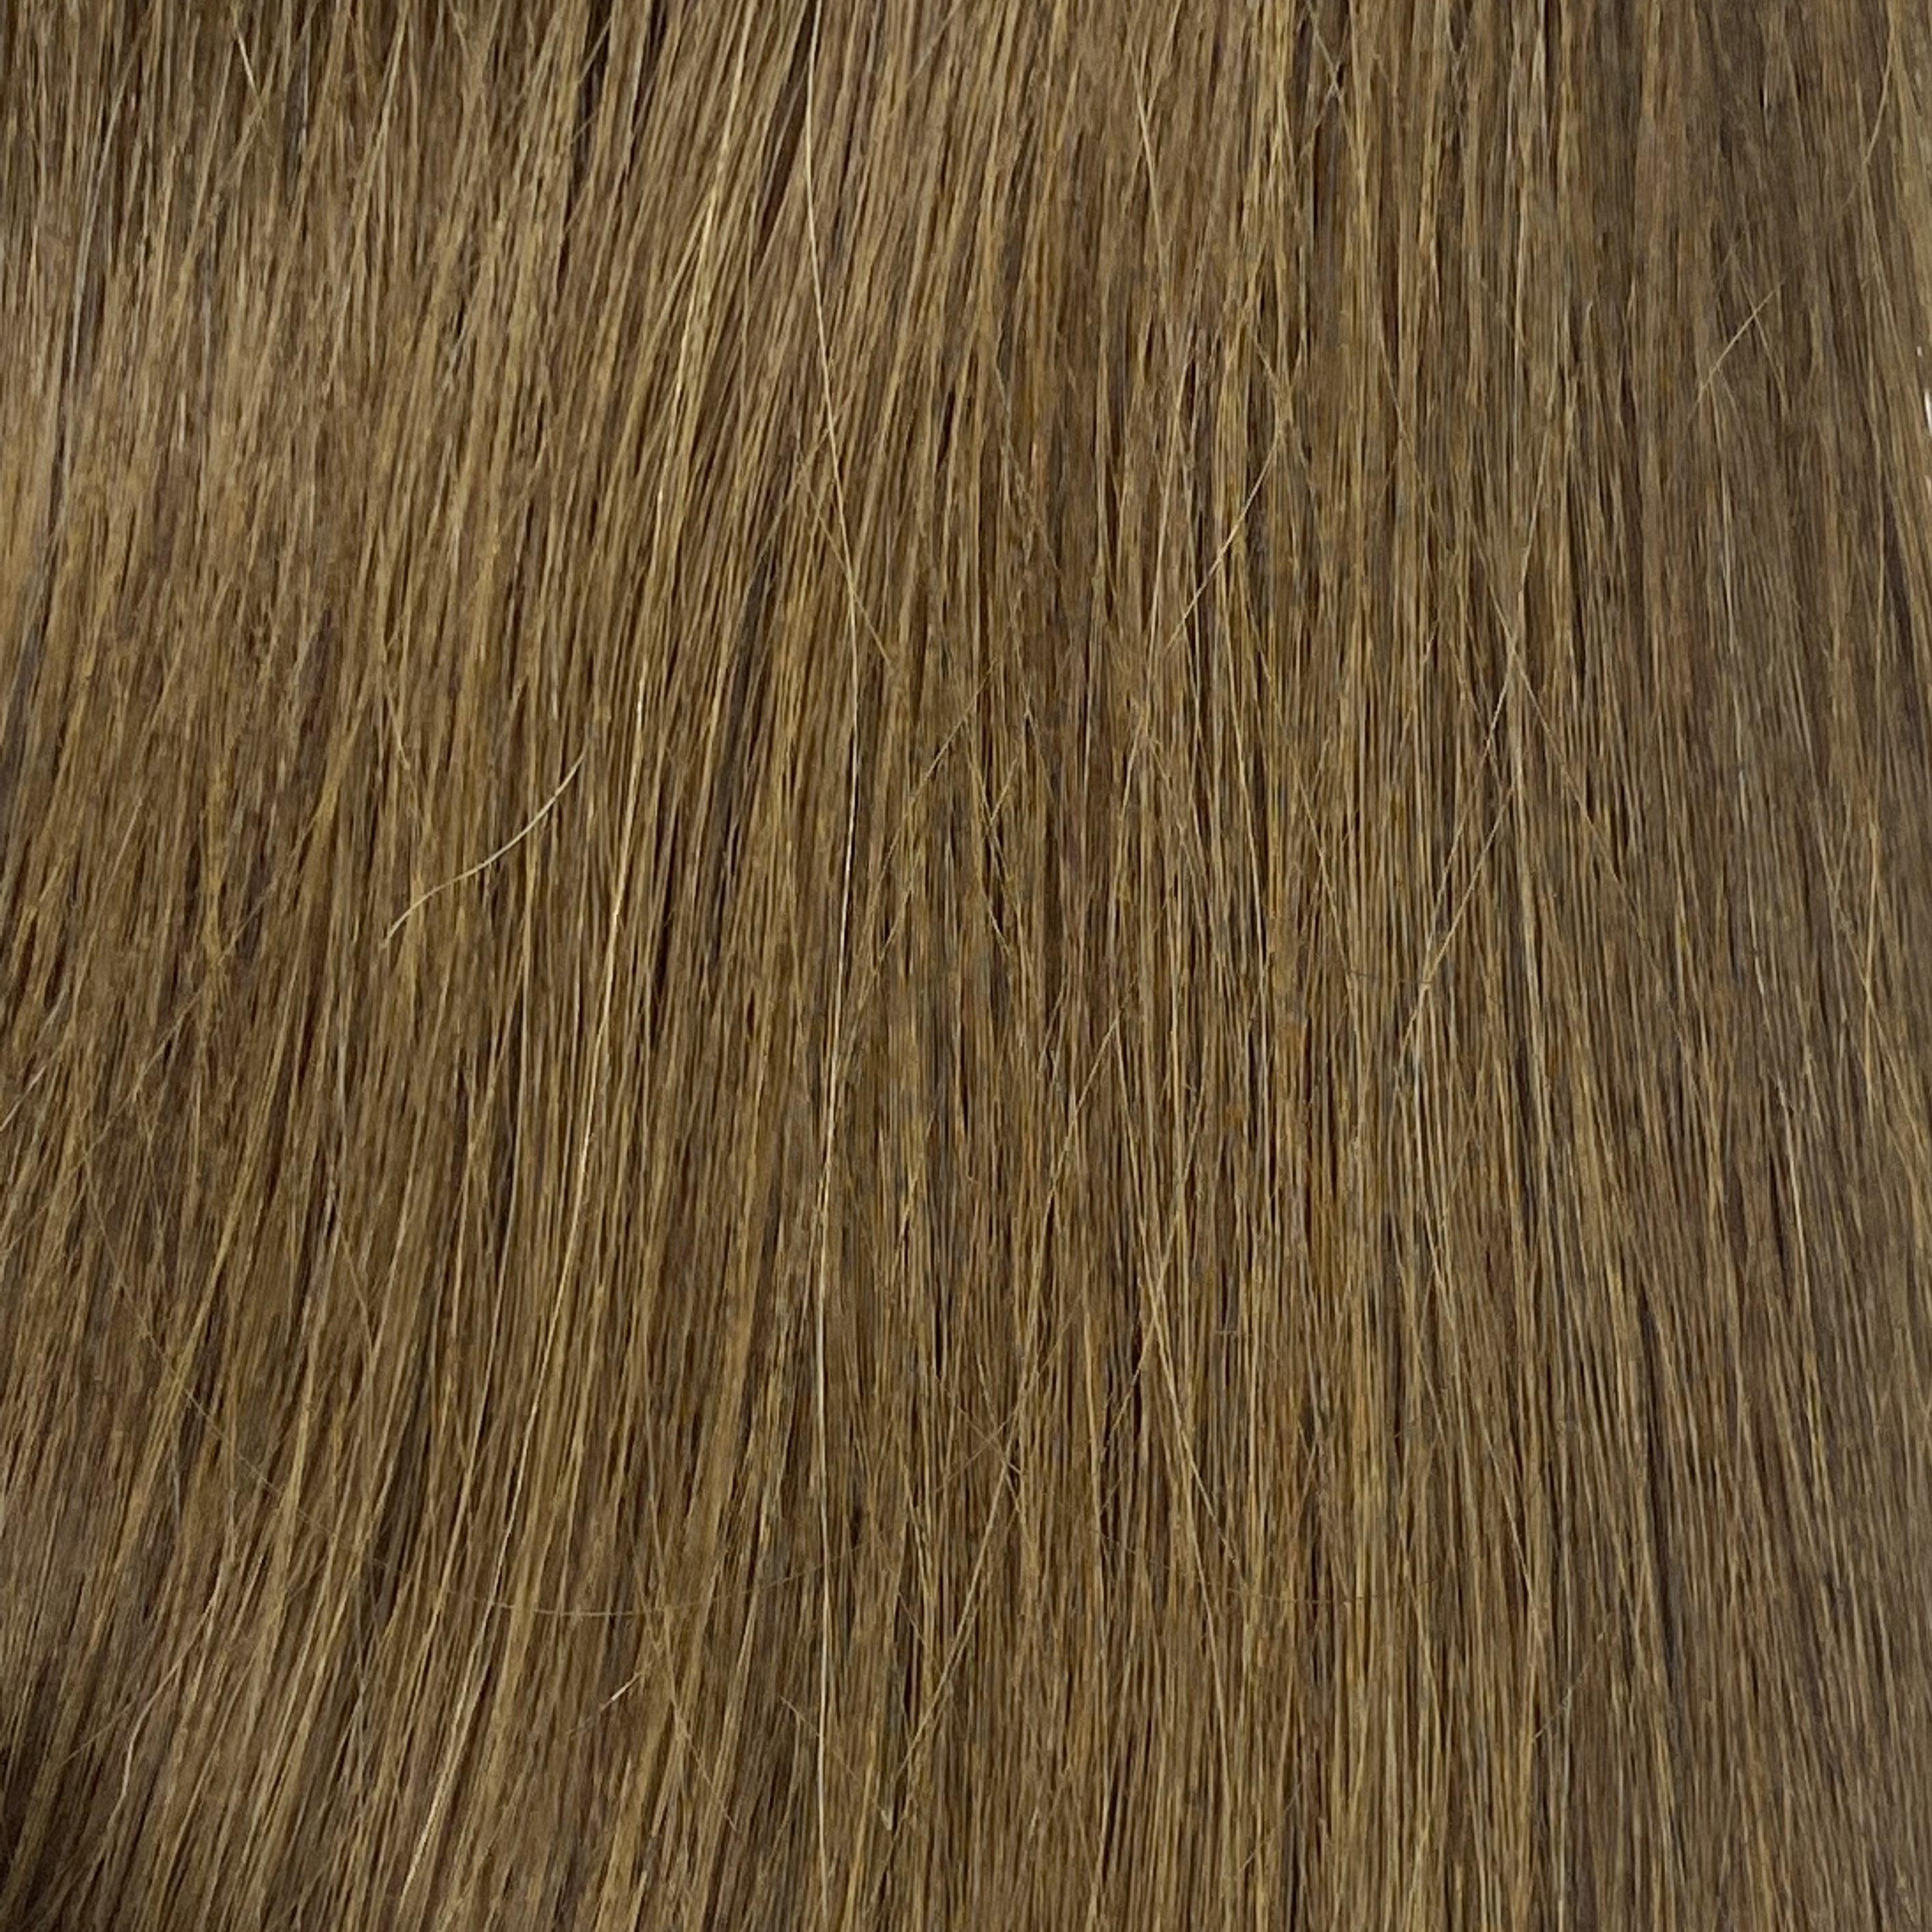 Velo Sale #6 - 16 inches - Copper Golden Blonde - Image 1